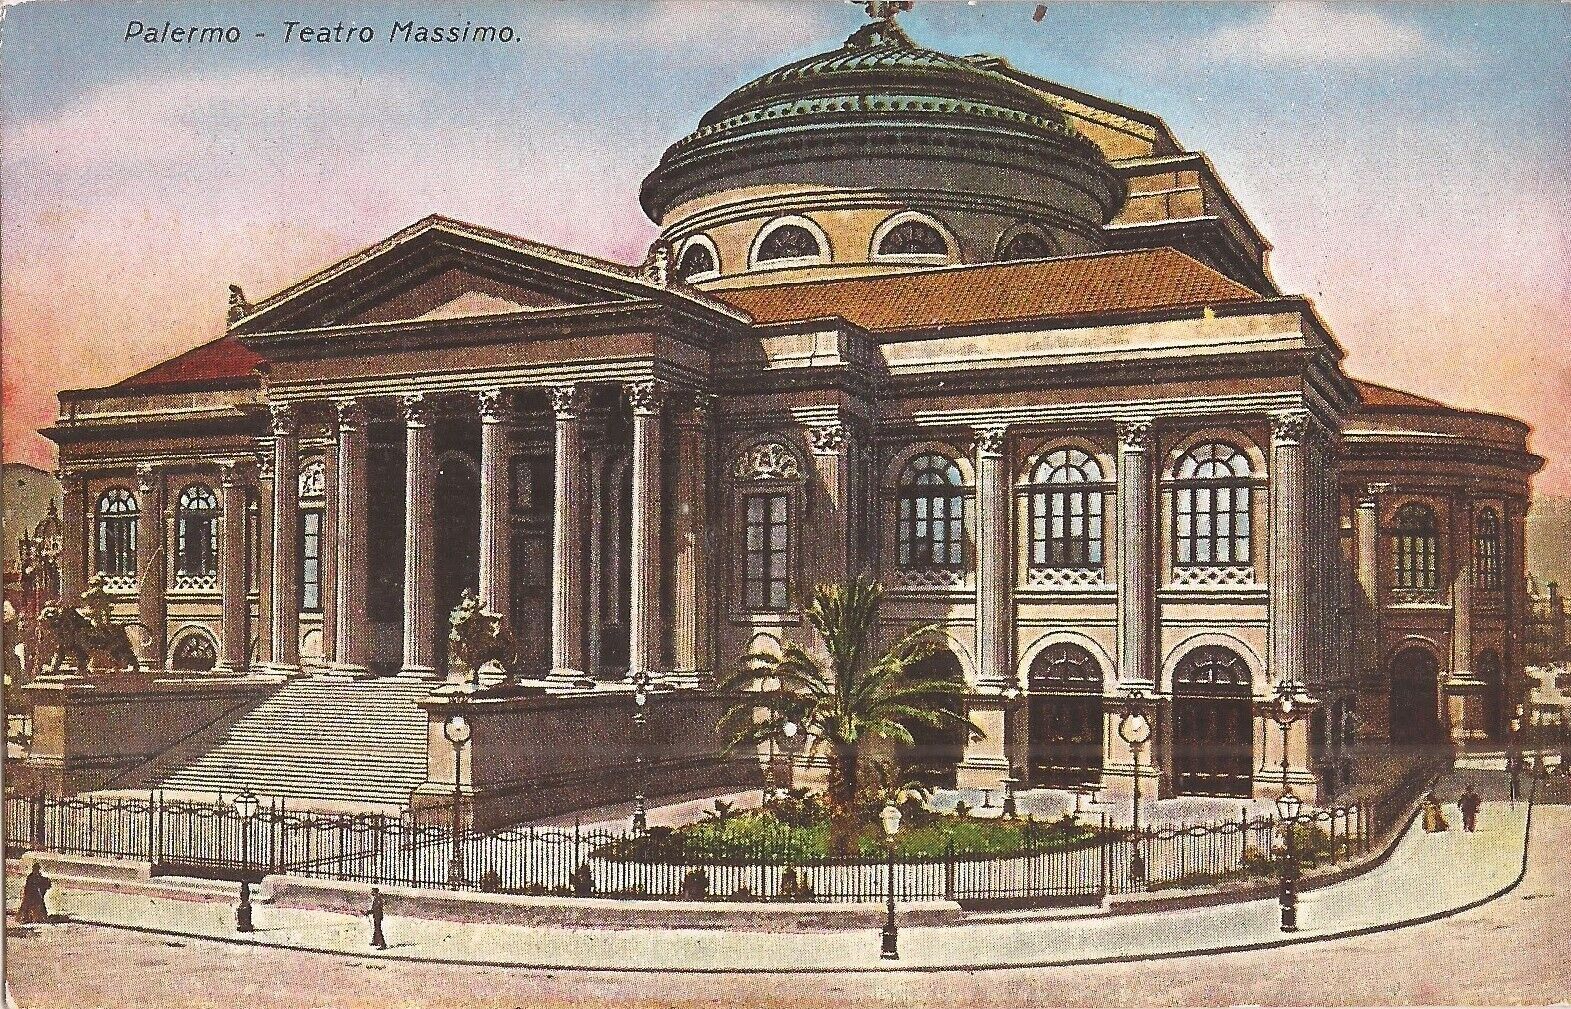 Palermo, Sicily - ITALY - Teatro Massimo